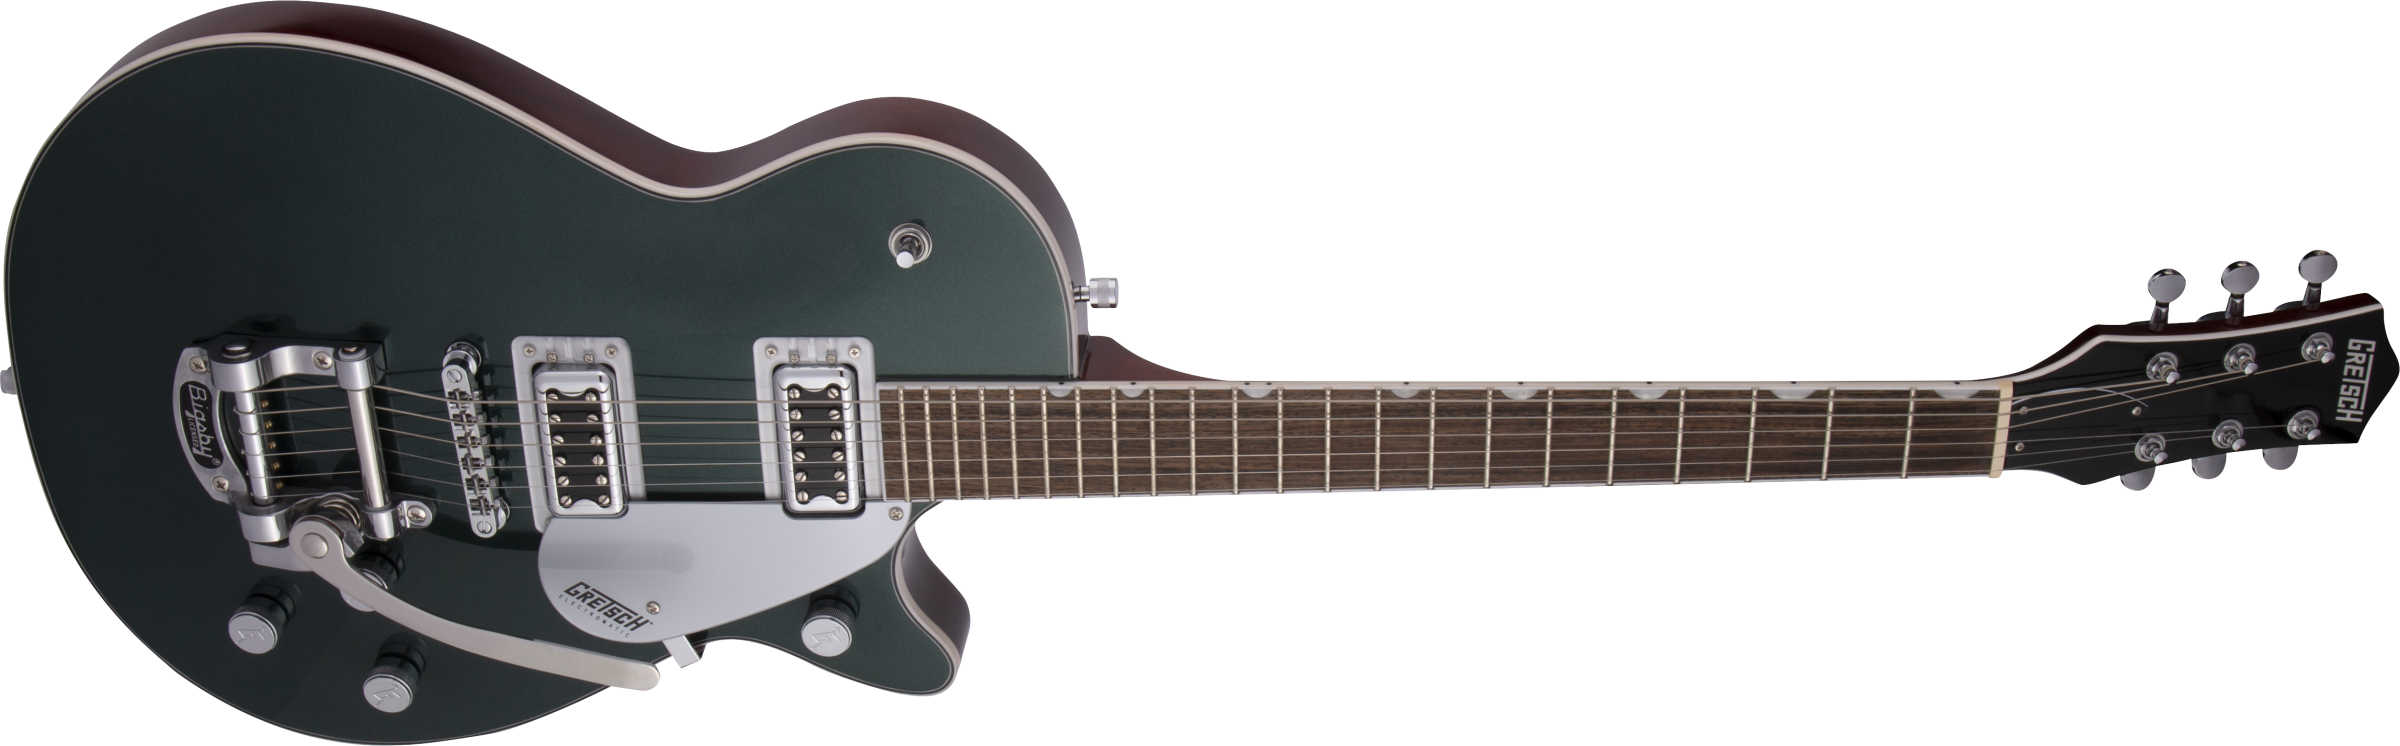 Gretsch G5230t Electromatic Jet Ft Single-cut Bigsby 2h Trem Lau - Cadillac Green - Enkel gesneden elektrische gitaar - Variation 2